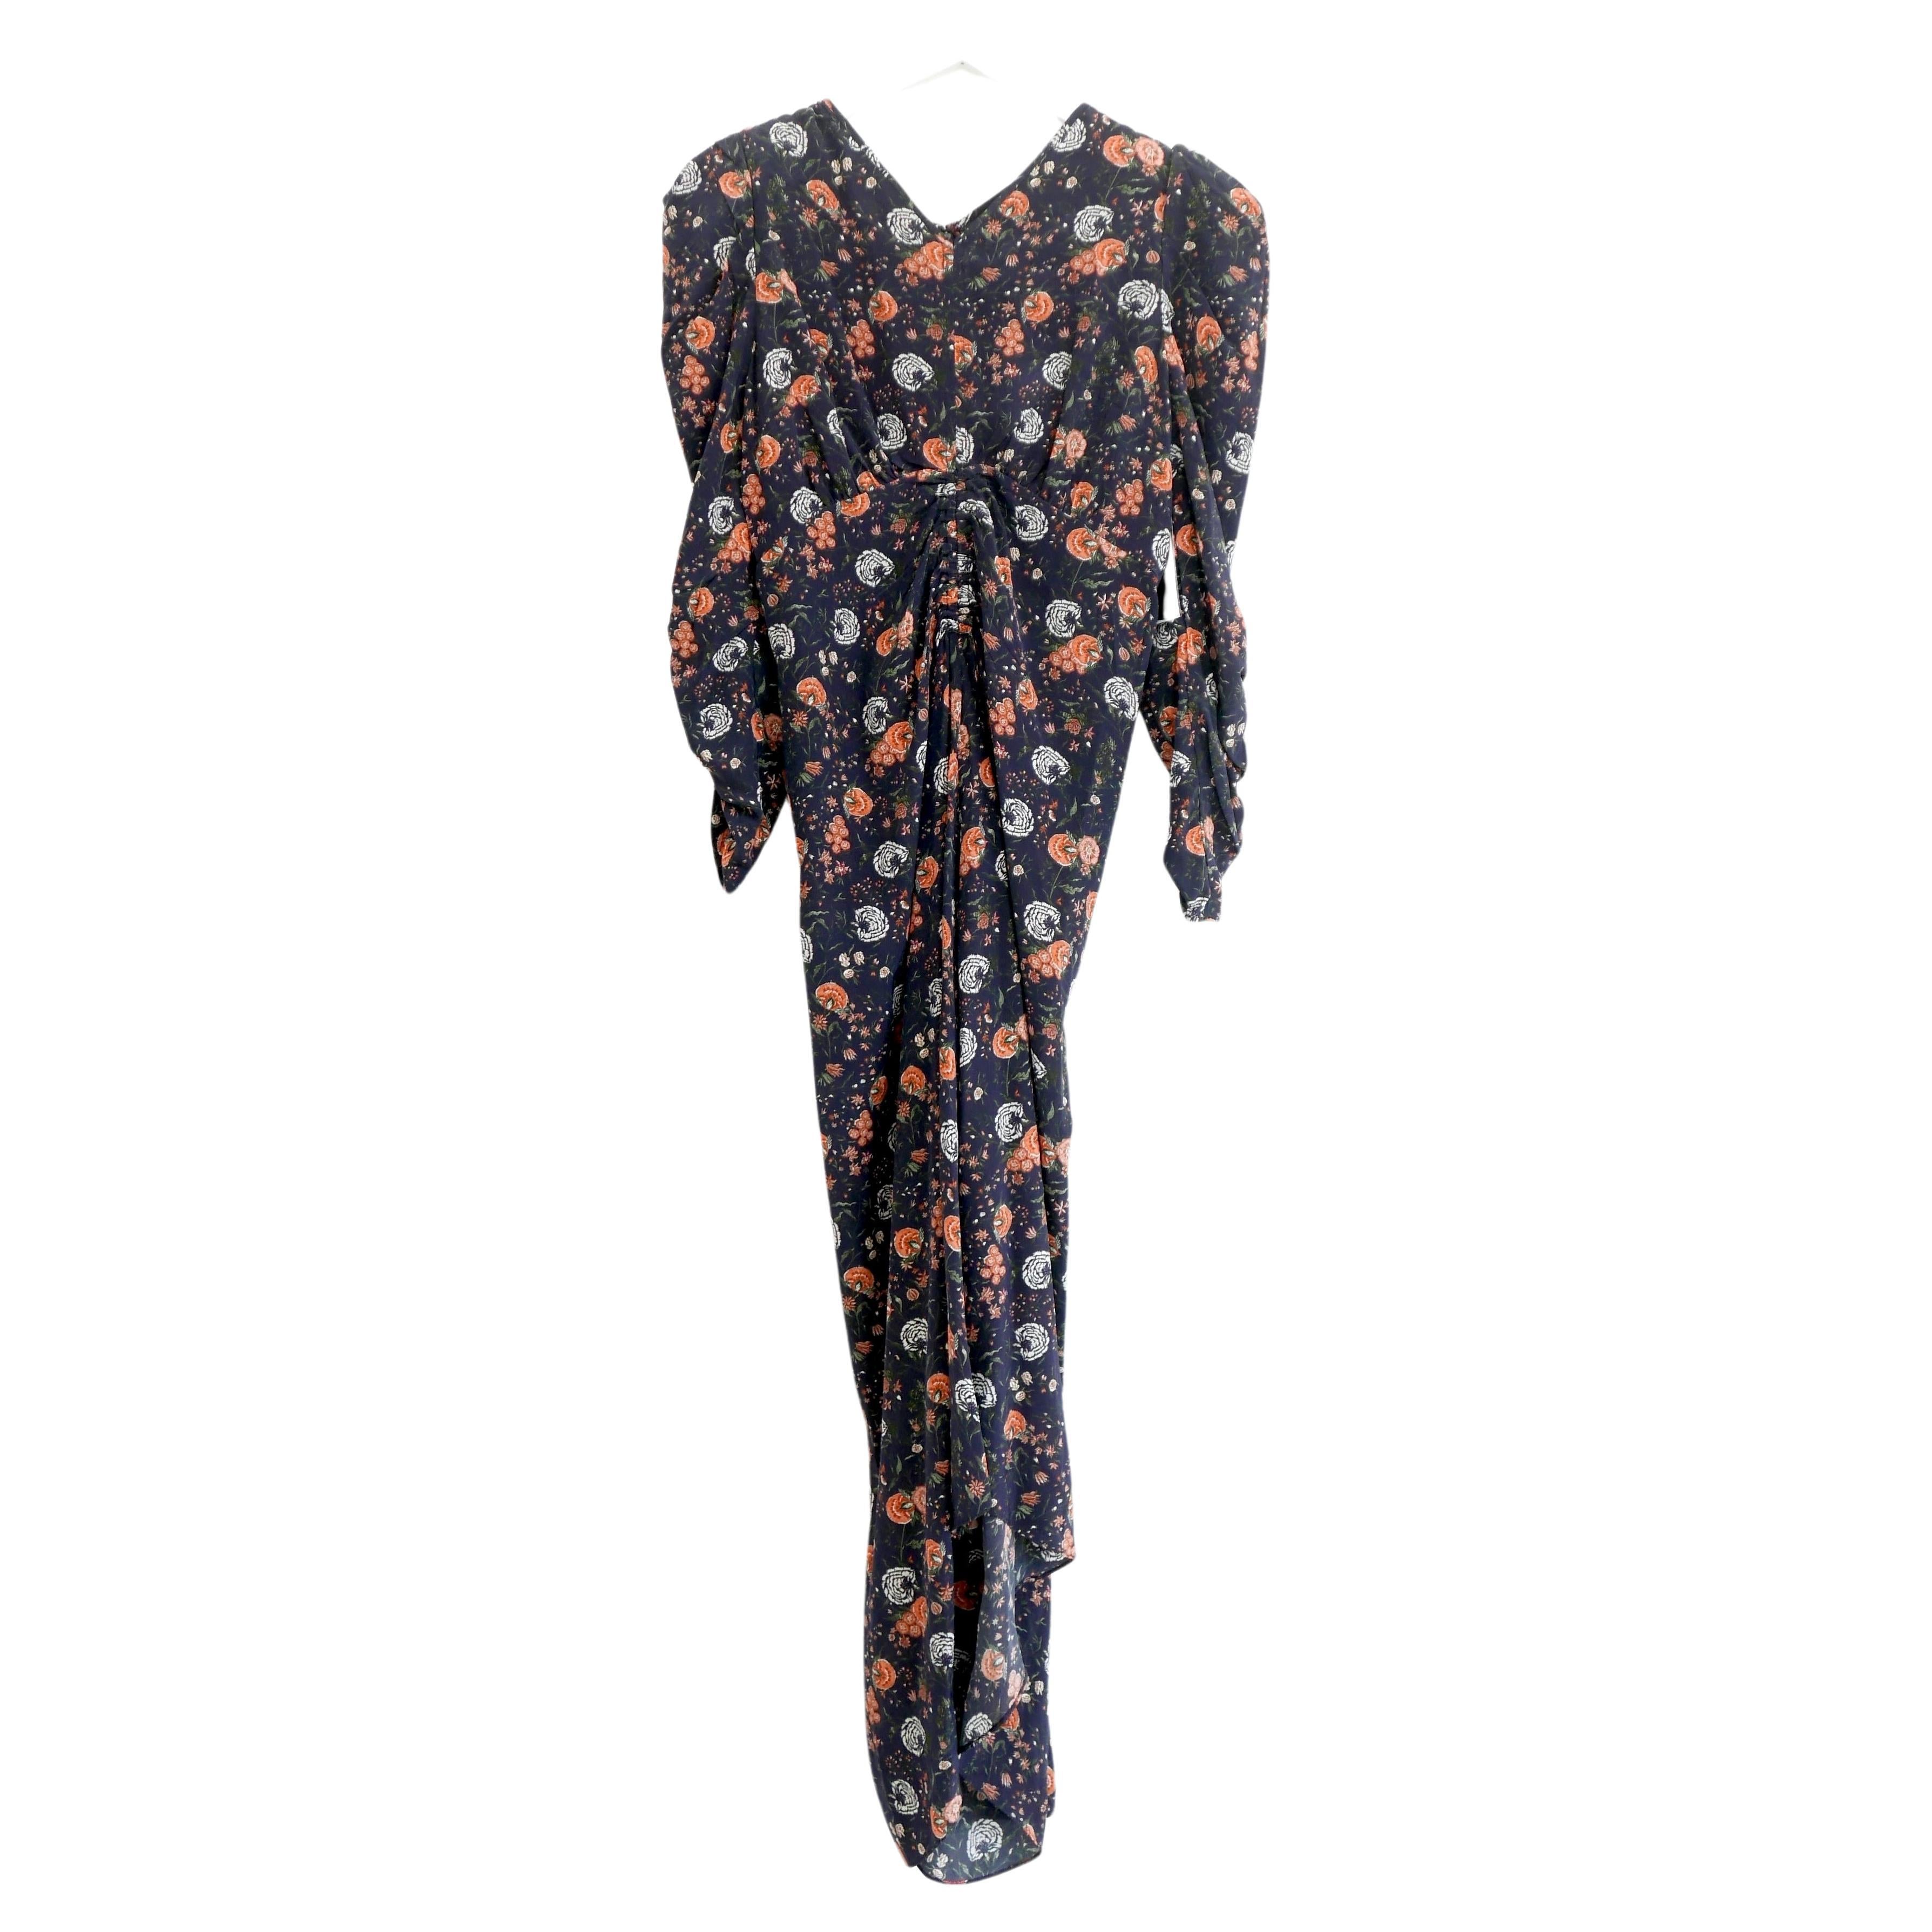  Isabel Marant Albini Floral Print Midnight Silk Dress For Sale